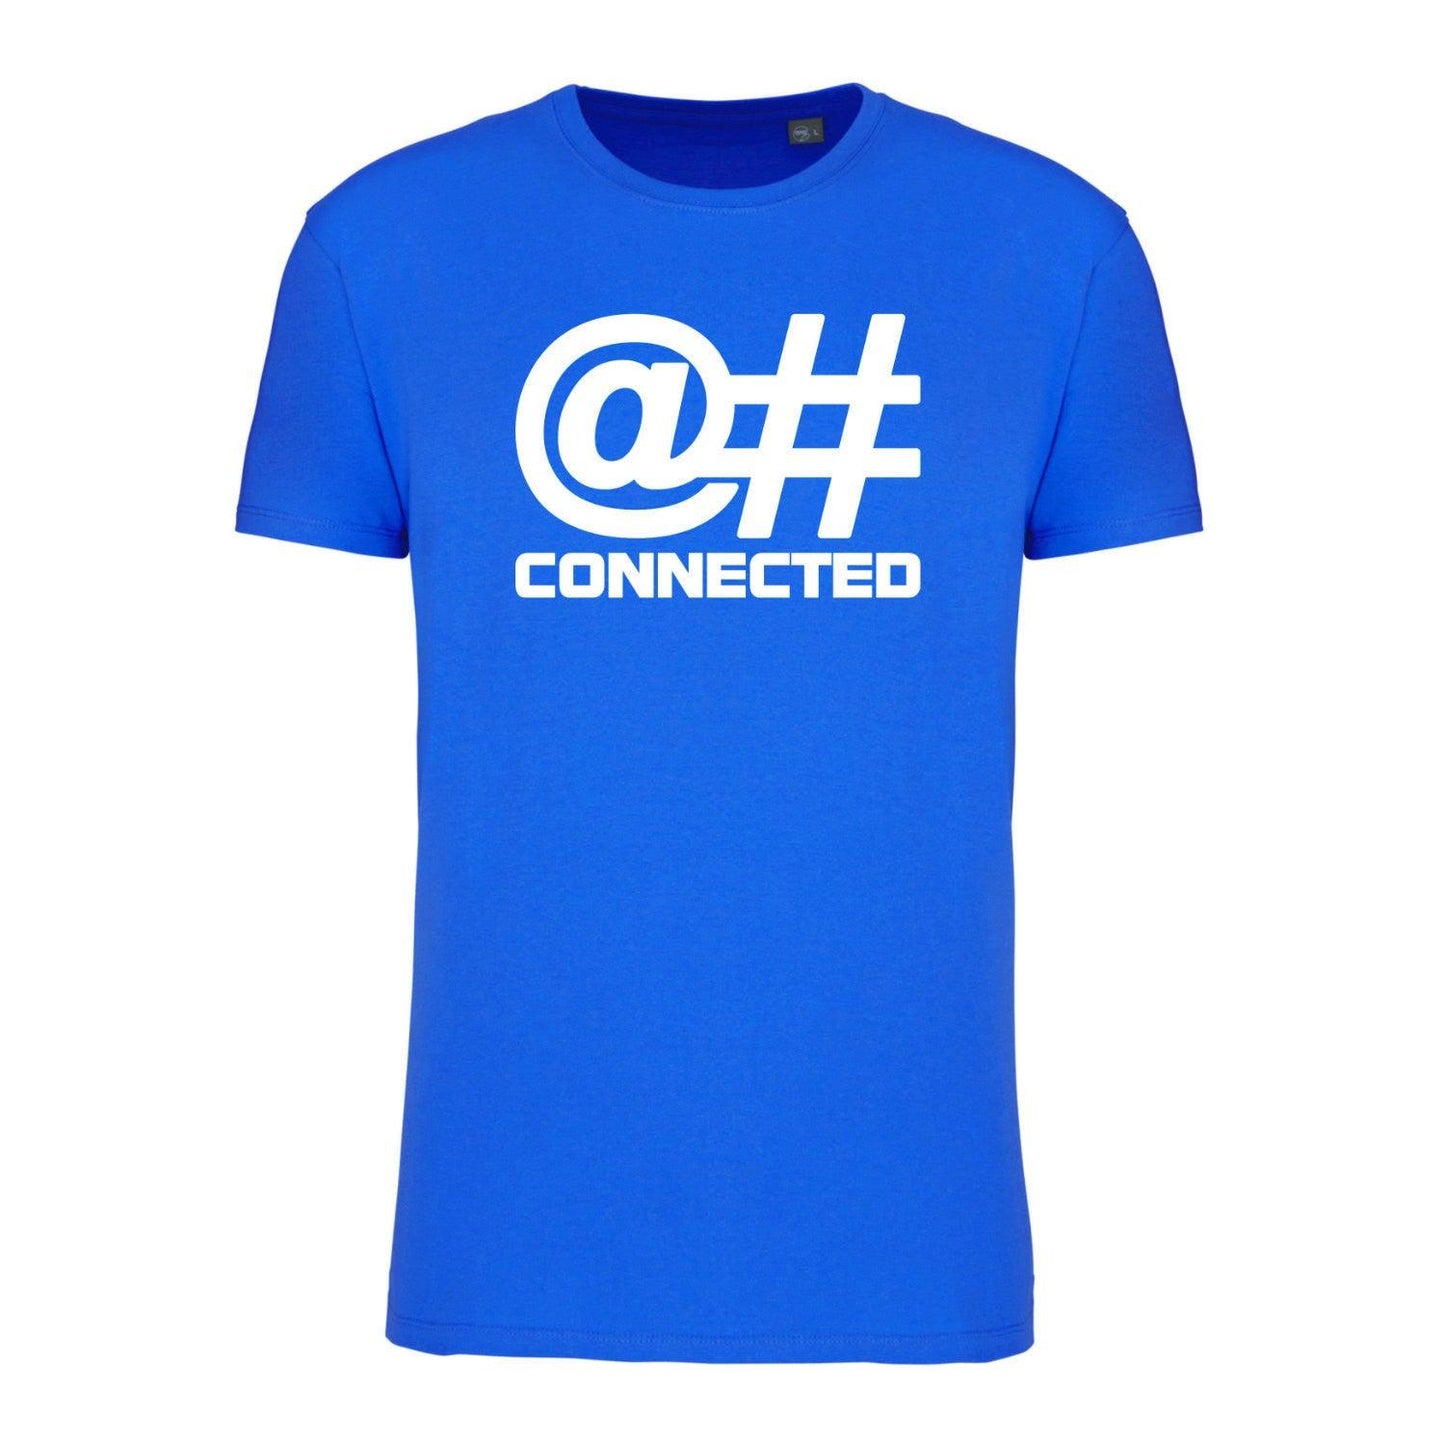 Tee-shirt unisexe bleu CONNECTED 100% coton biologique & vegan - CONNECTED Streetwear